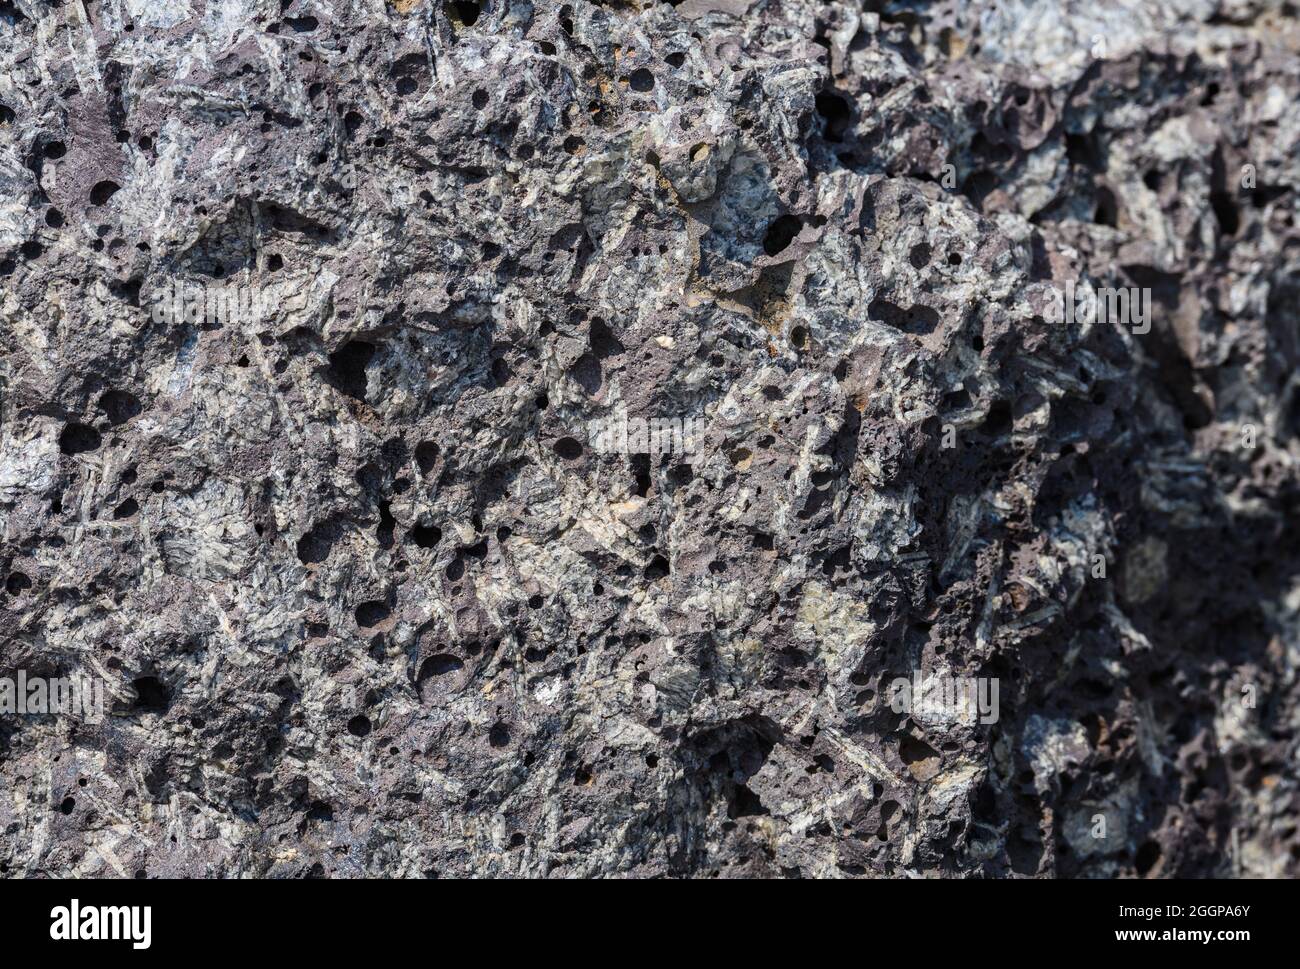 Porphyritic igneous rocks with large feldspar crystals. Oregon, USA. Stock Photo